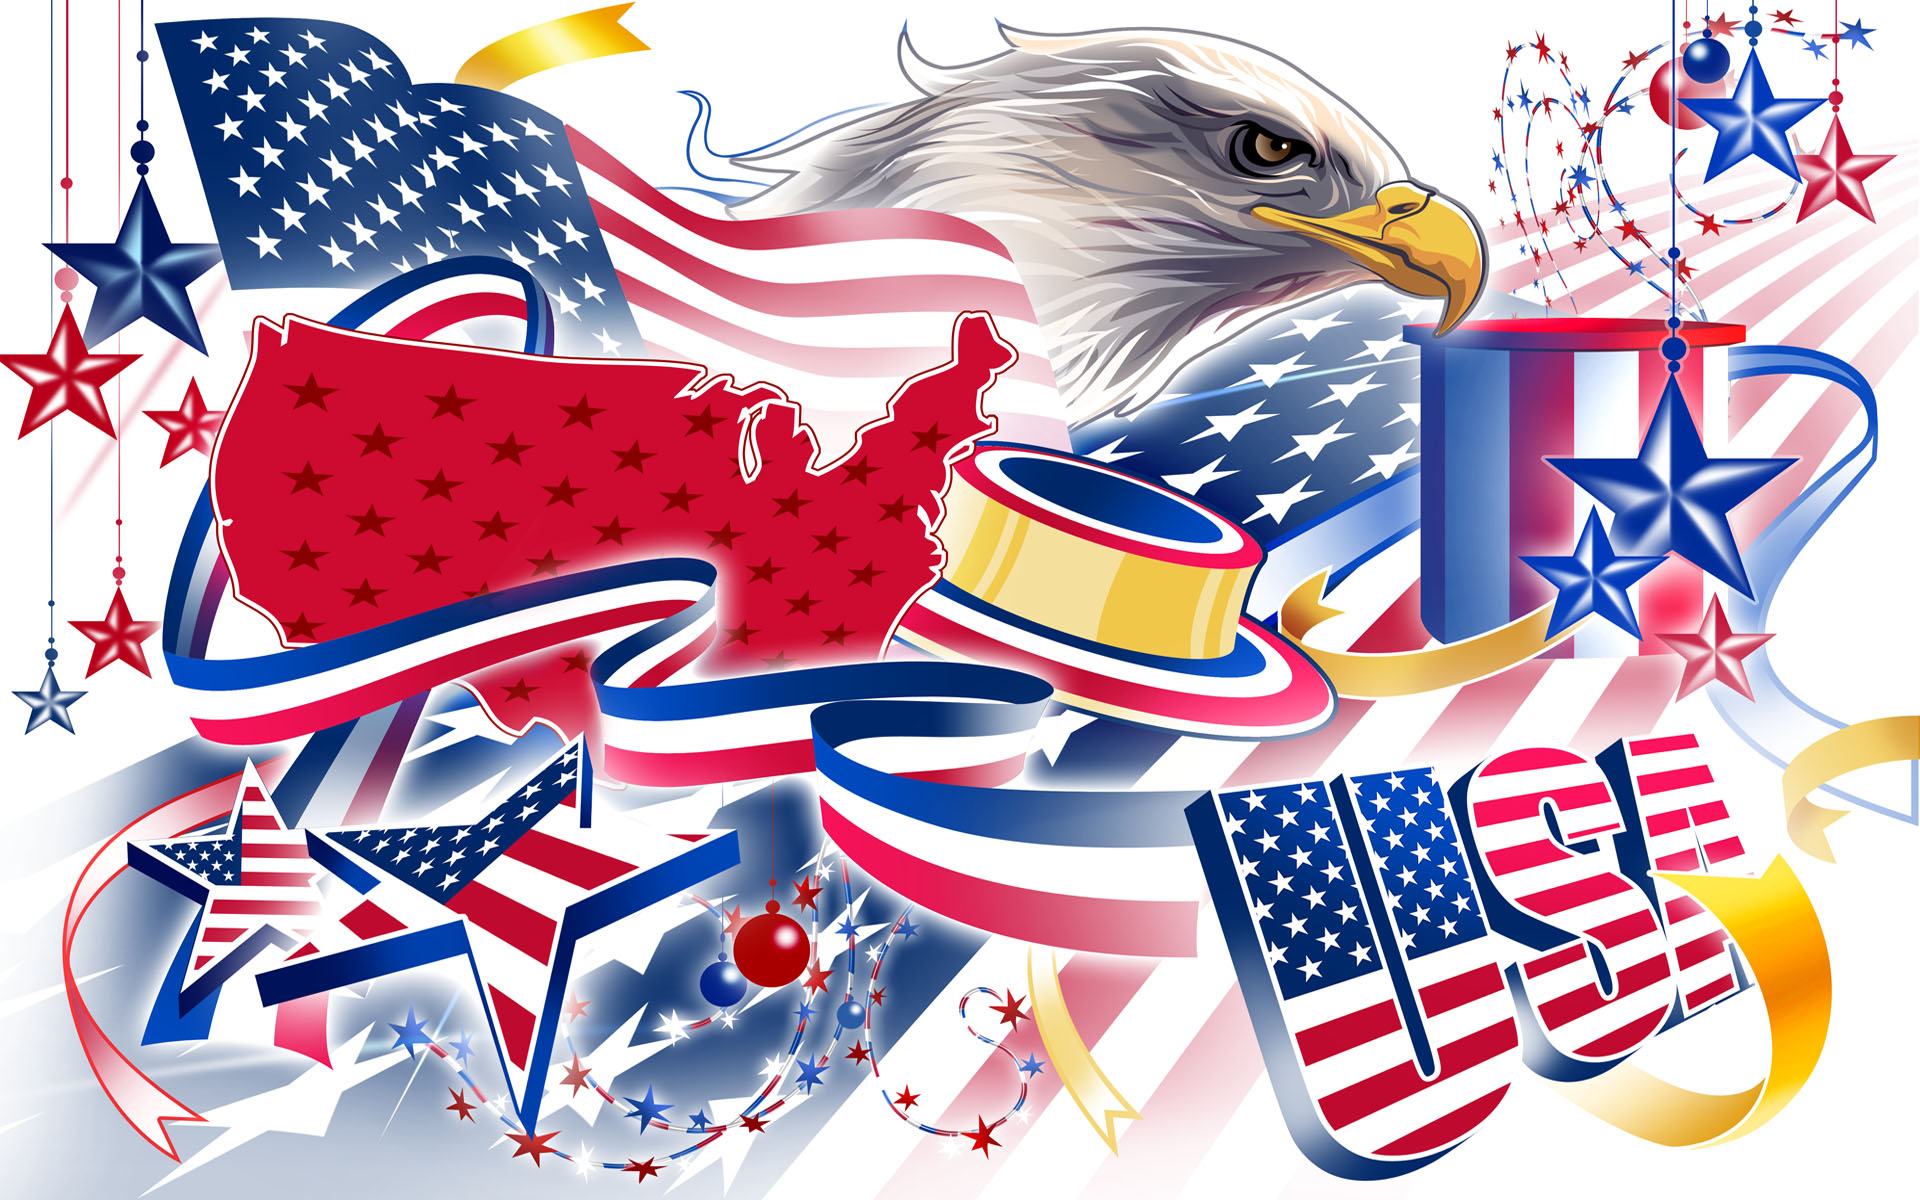 mobile desktop background american flag with eagle pics download